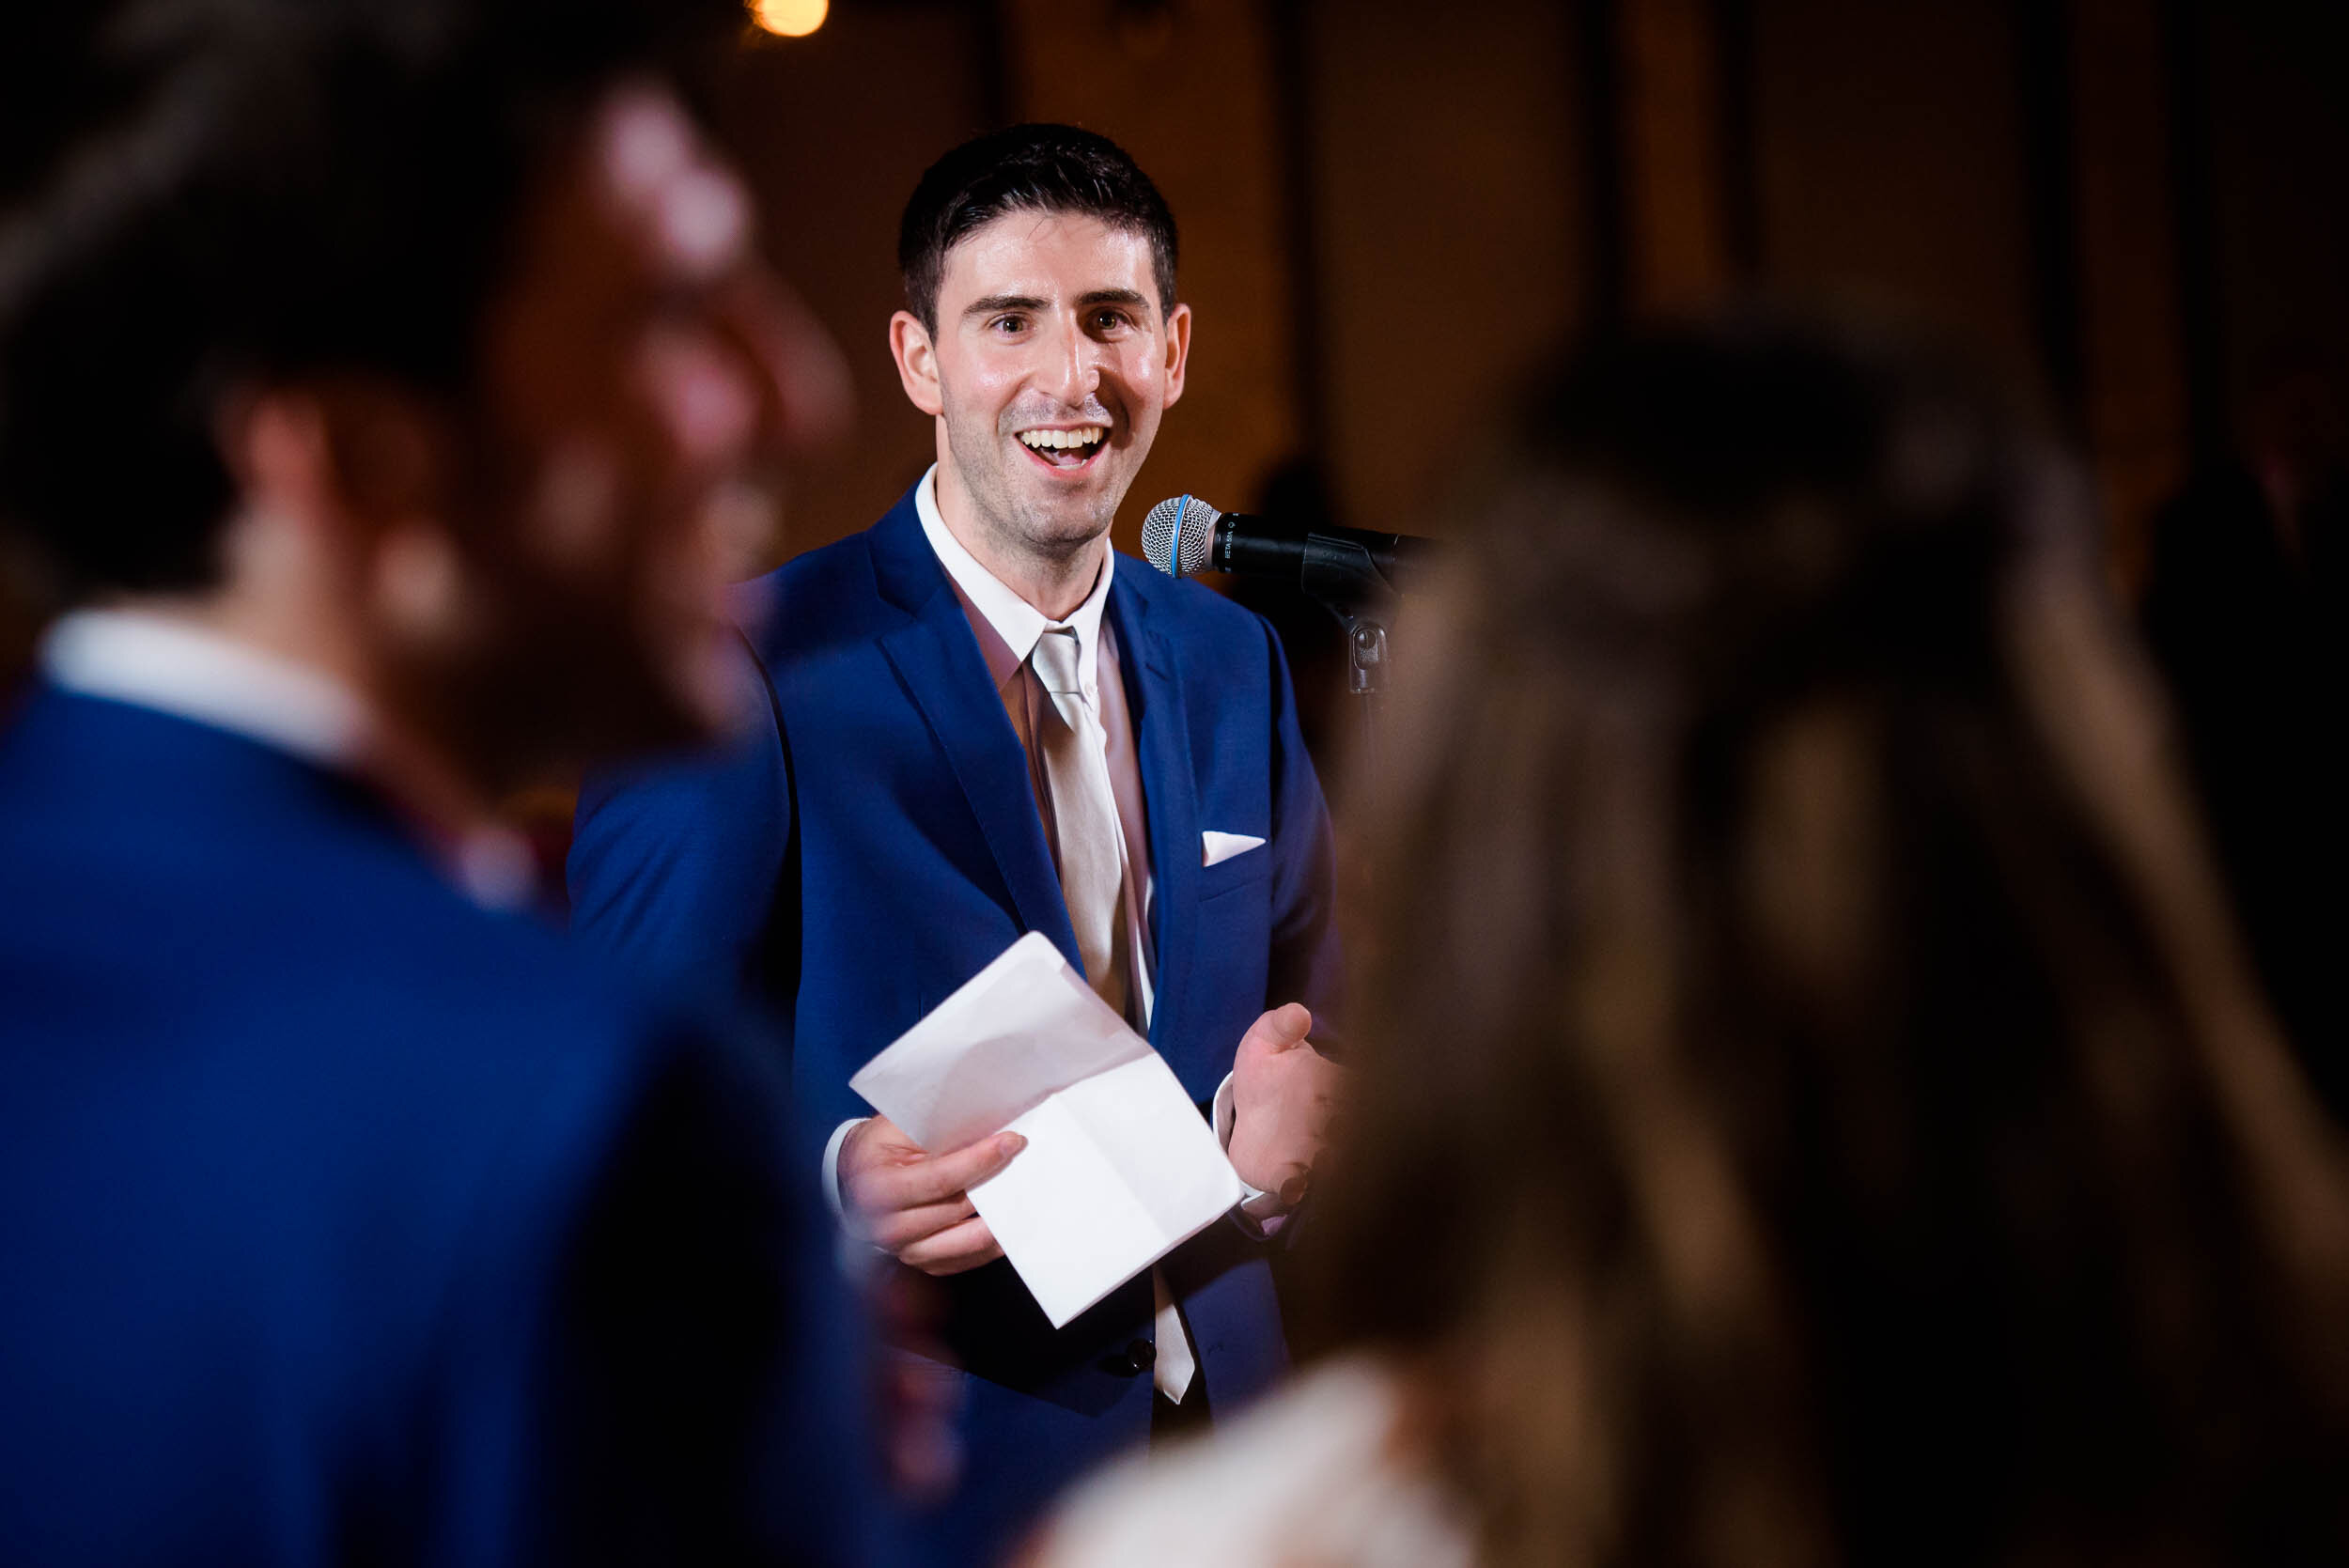 Best man speech photo: Ravenswood Event Center Chicago wedding captured by J. Brown Photography.  